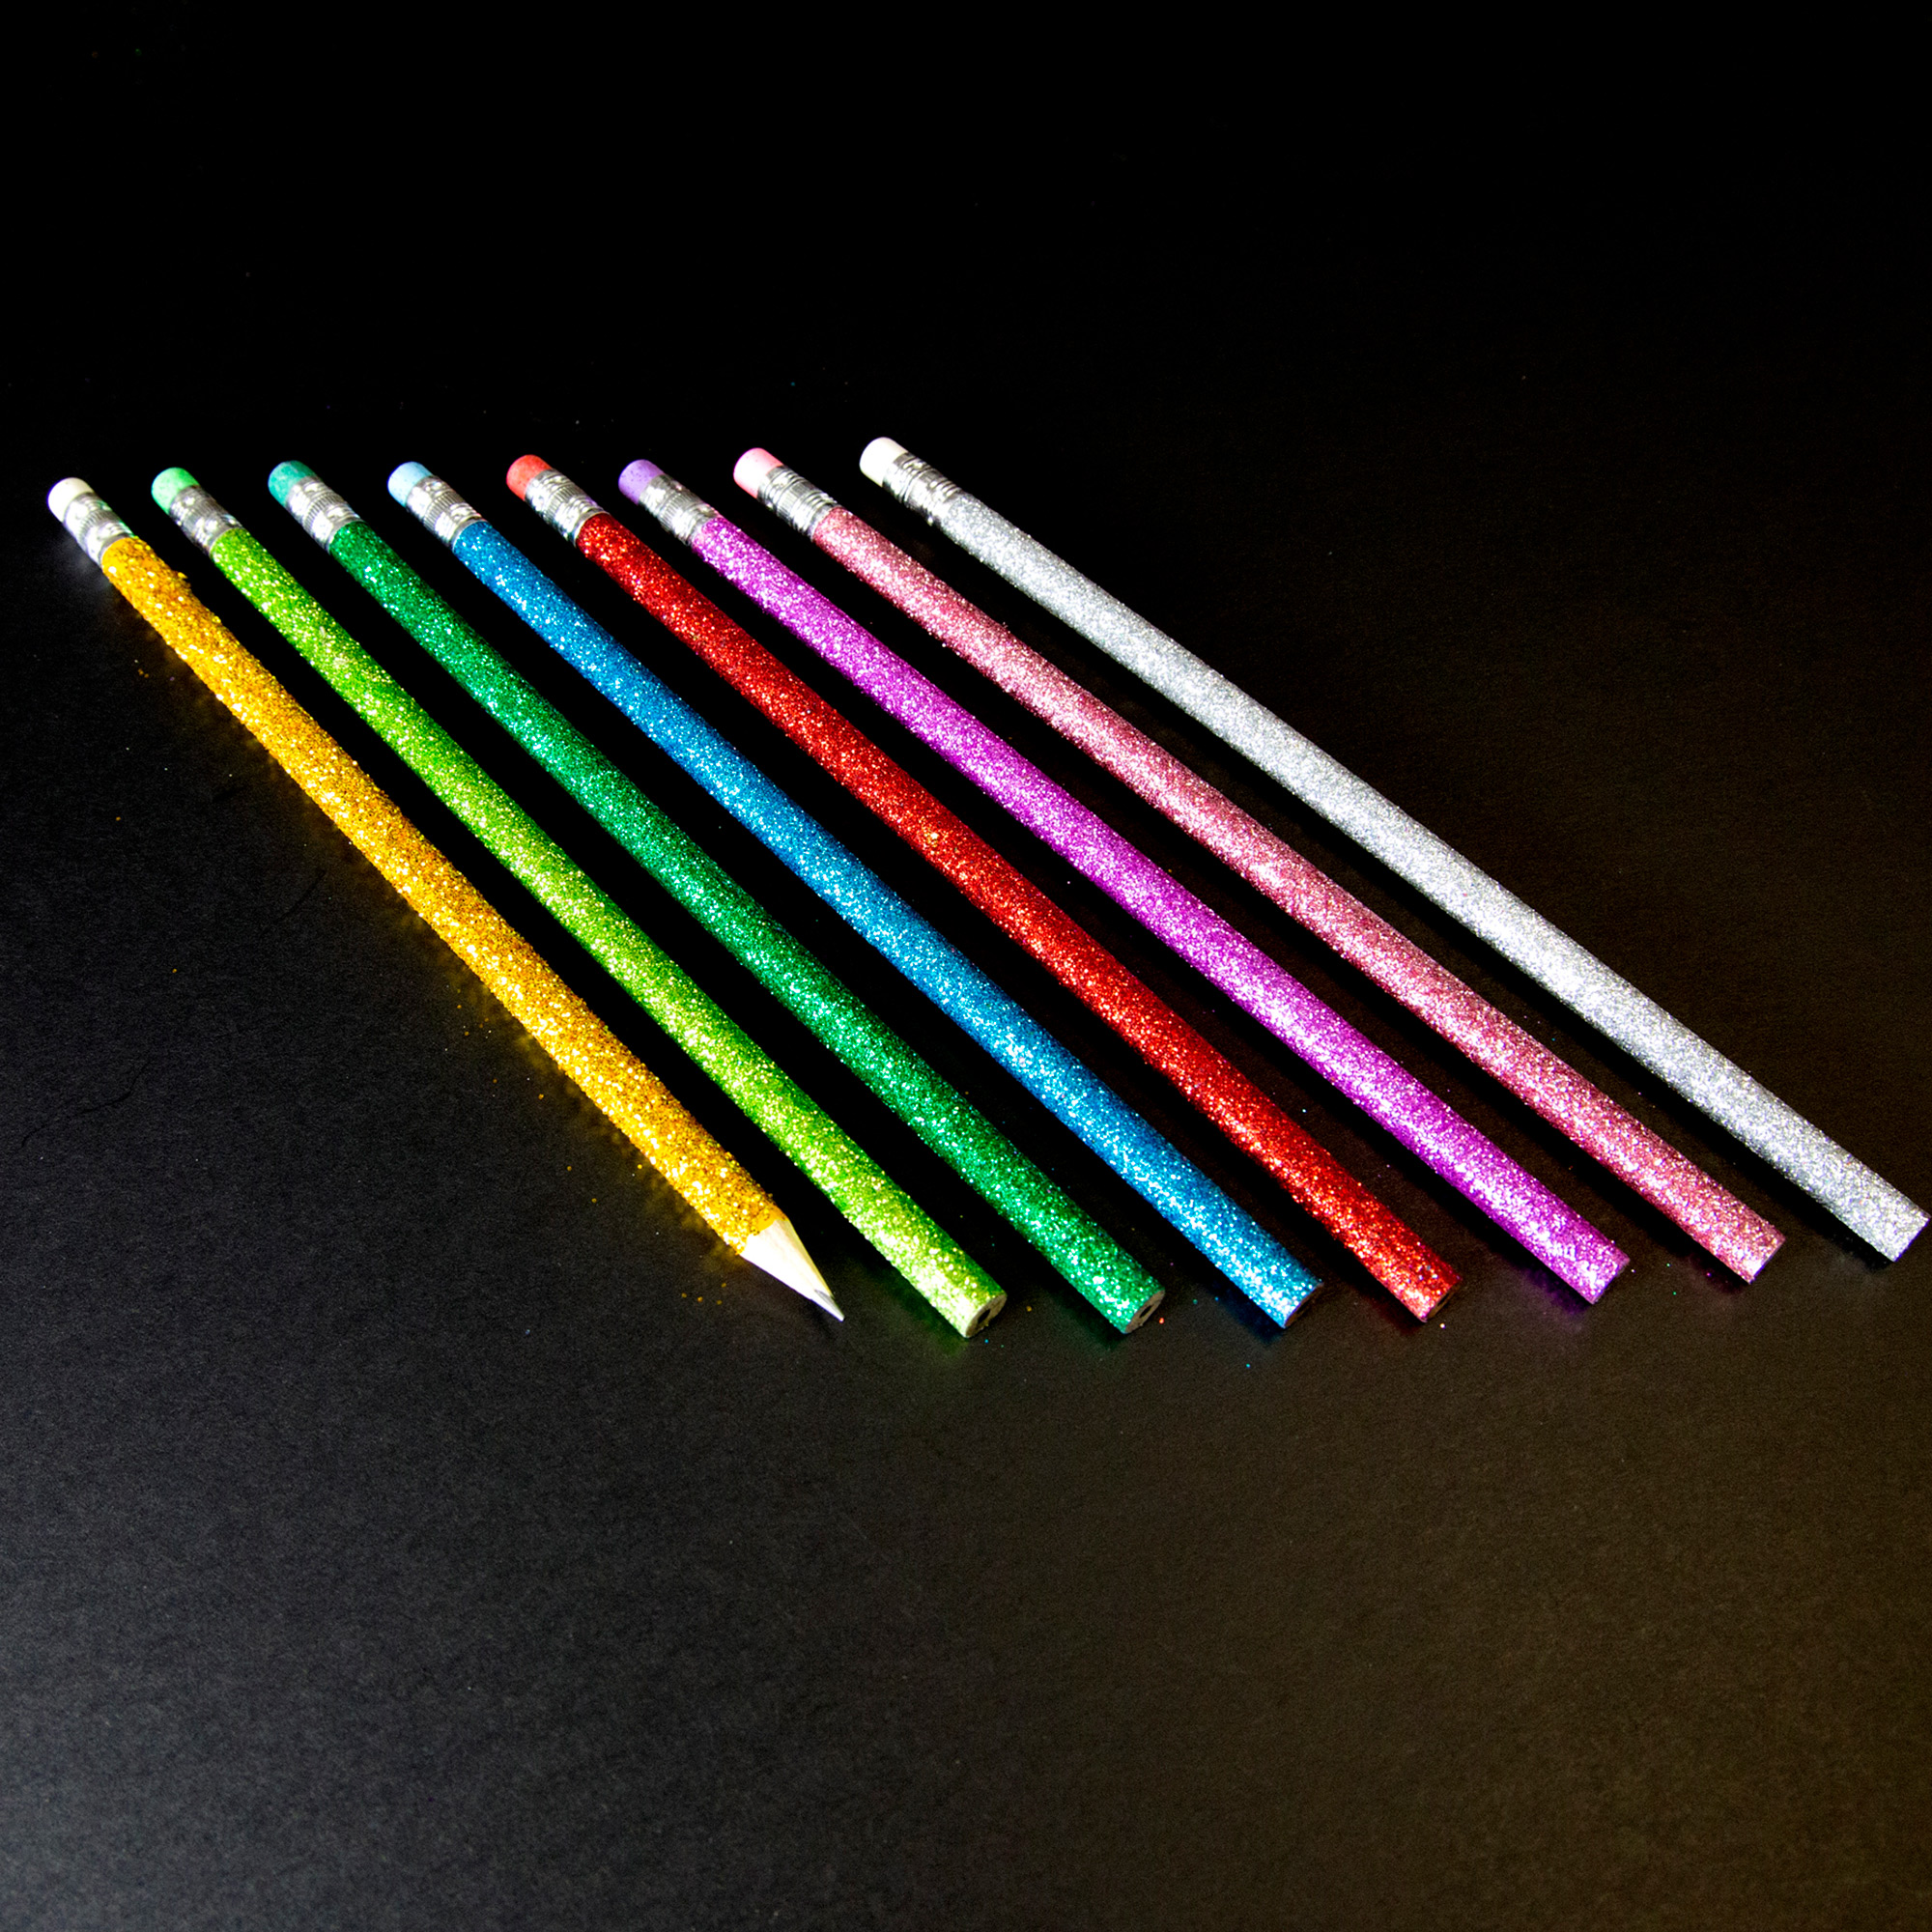 BAZIC Metallic Glitter Wood Pencil w/ Eraser (8/Pack) Bazic Products